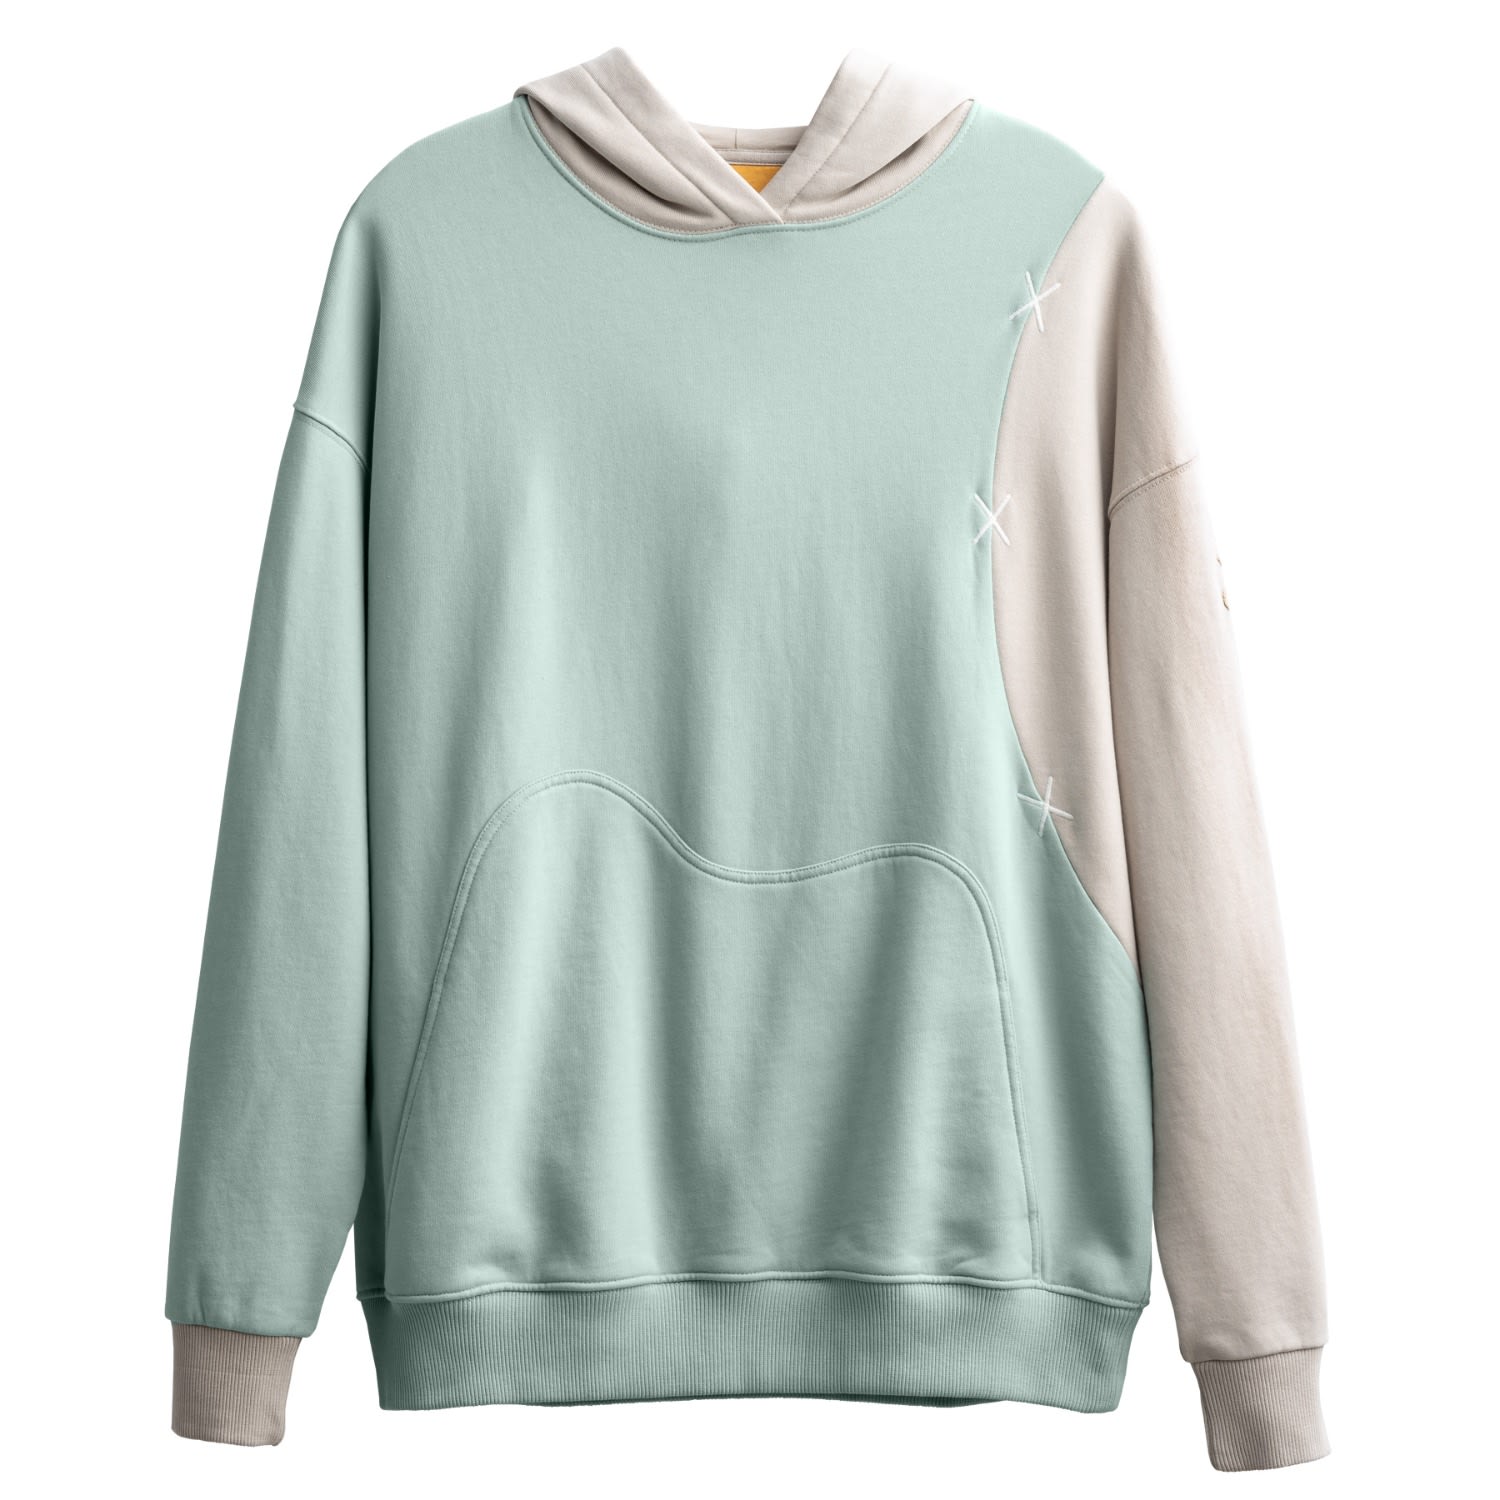 Men's Green Unisex Design Hoodie Sweatshirt - Oileka - Mint Extra Small KAFT